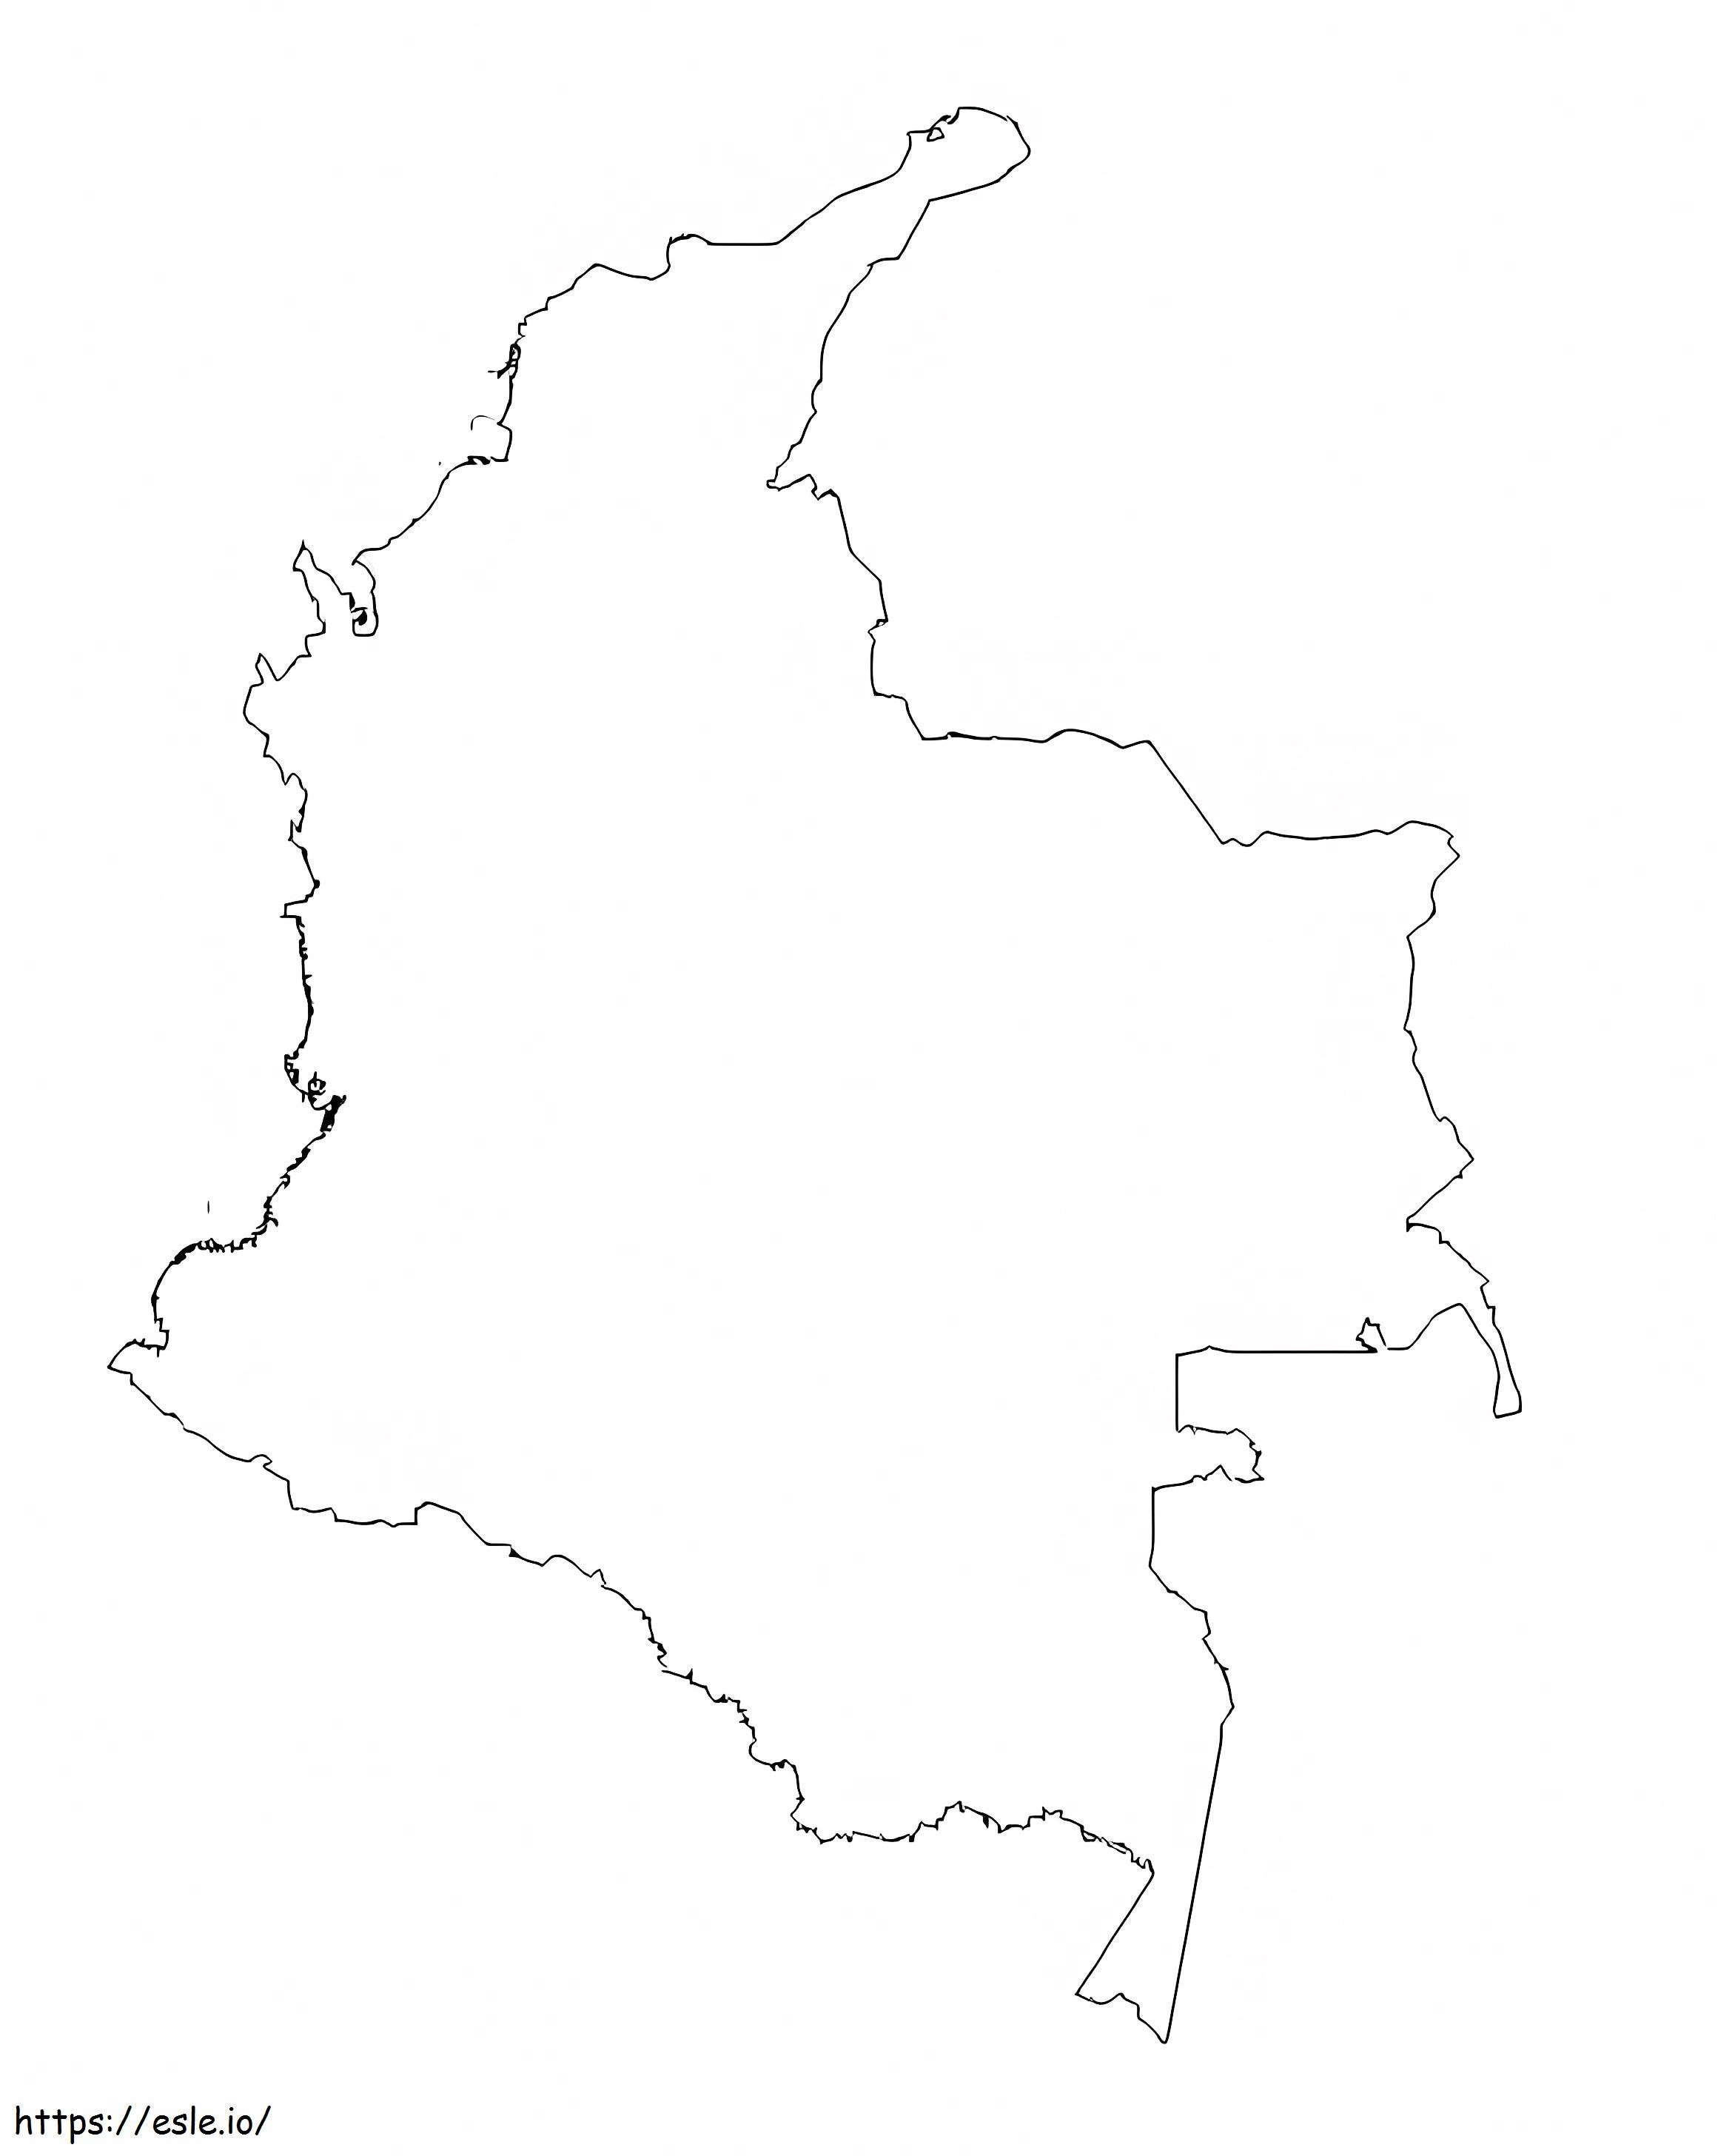 Mapa konturowa Kolumbii kolorowanka